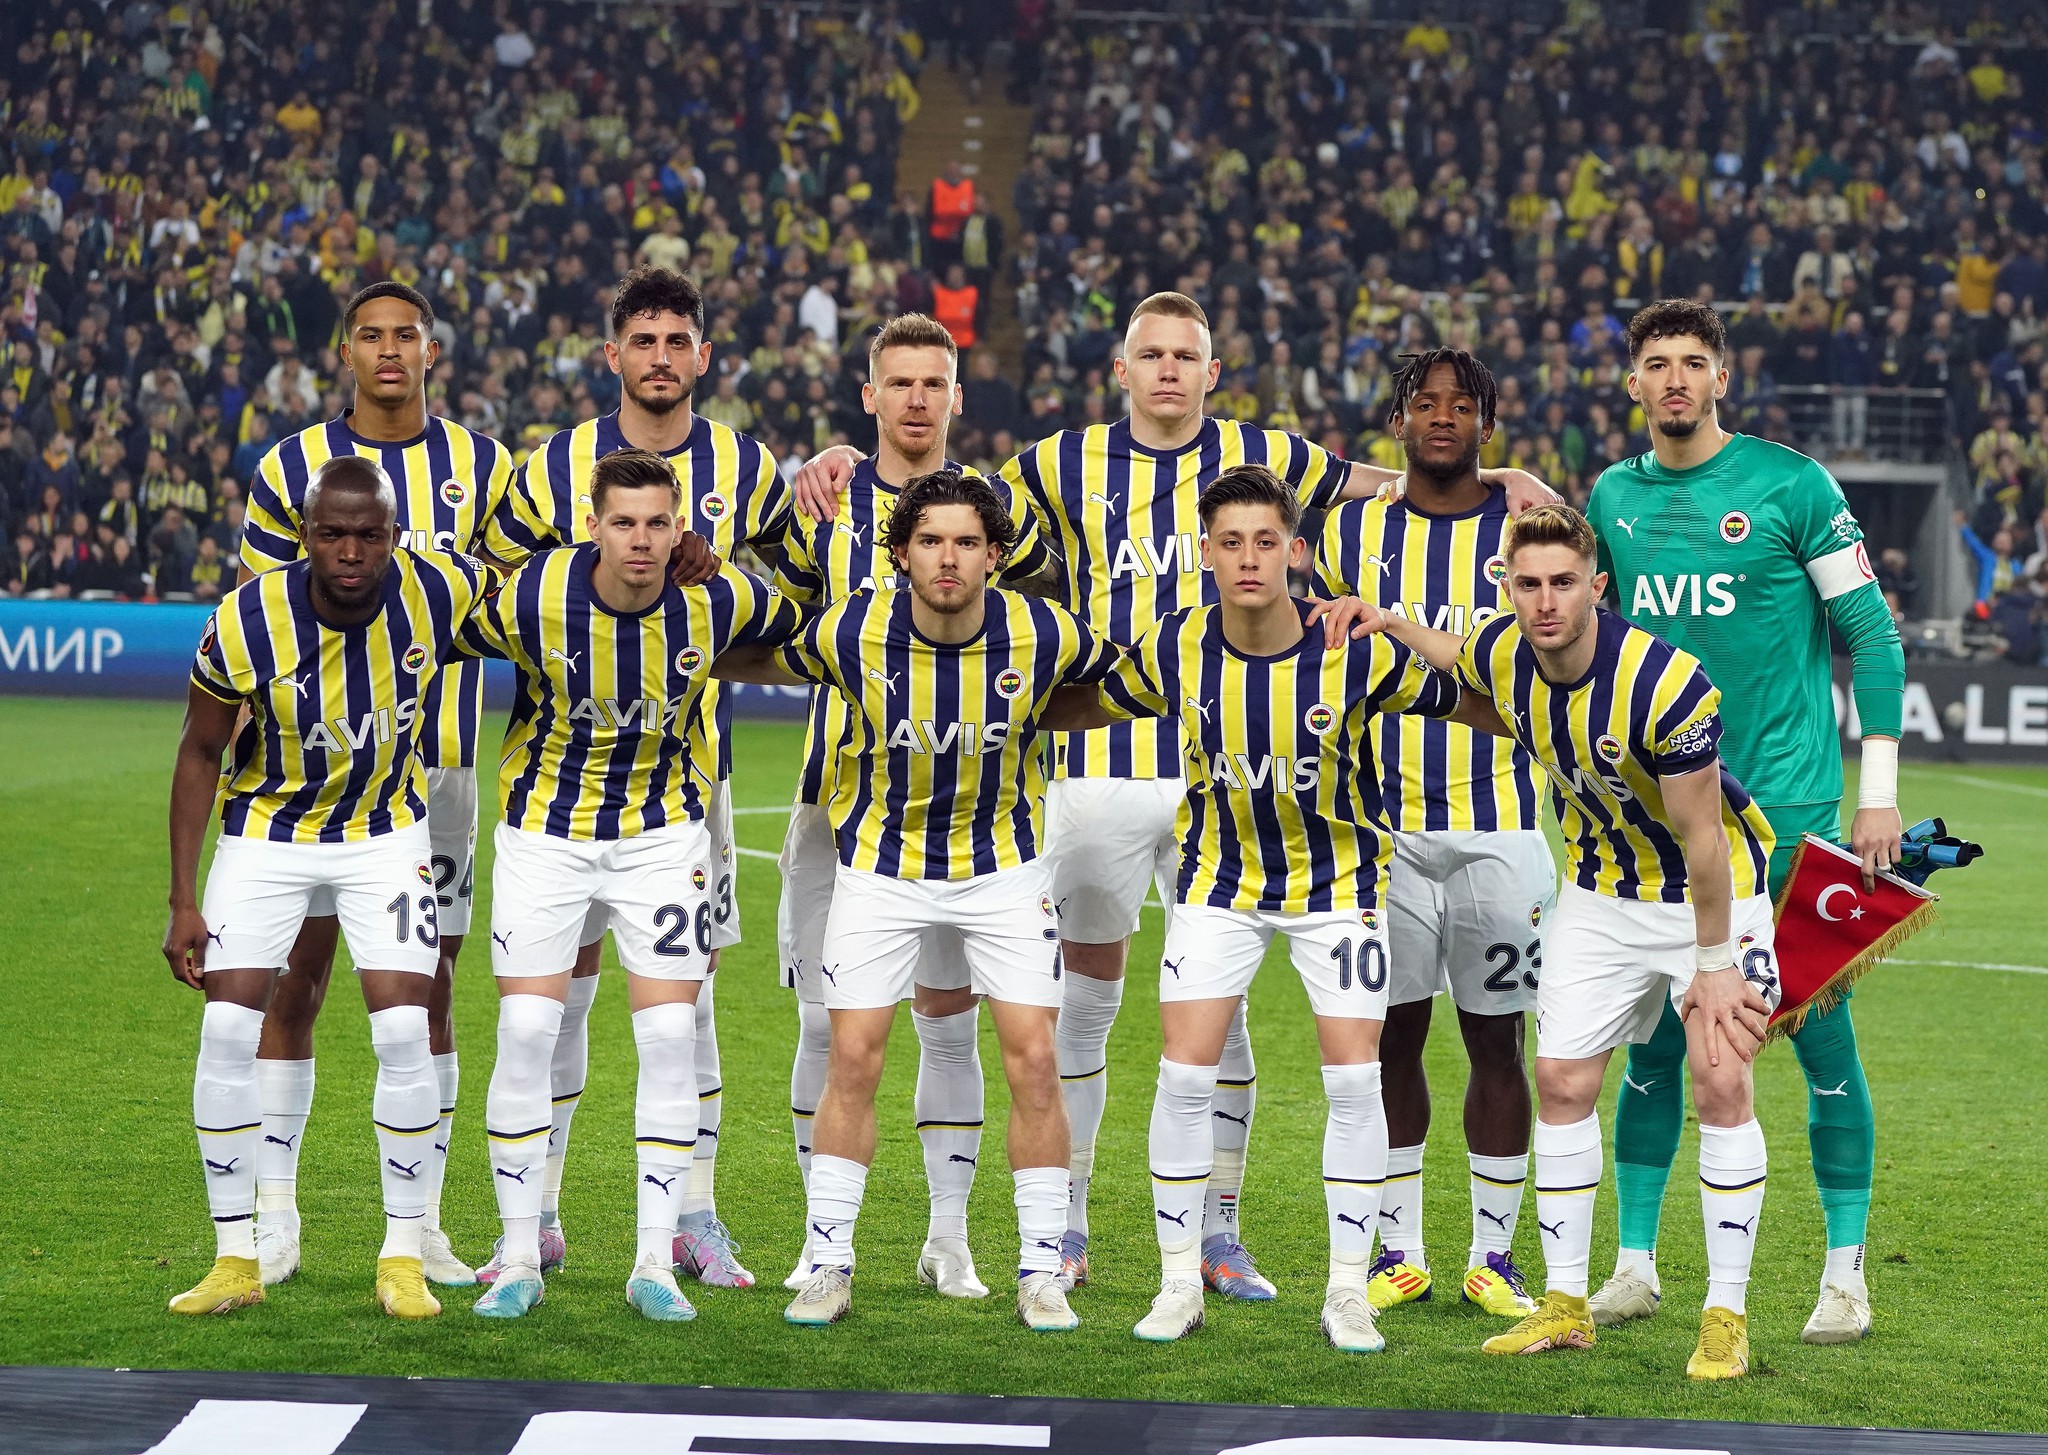 TRANSFER HABERİ: Fenerbahçe’ye İtalyan ekolü hoca! Herkes Montella derken...